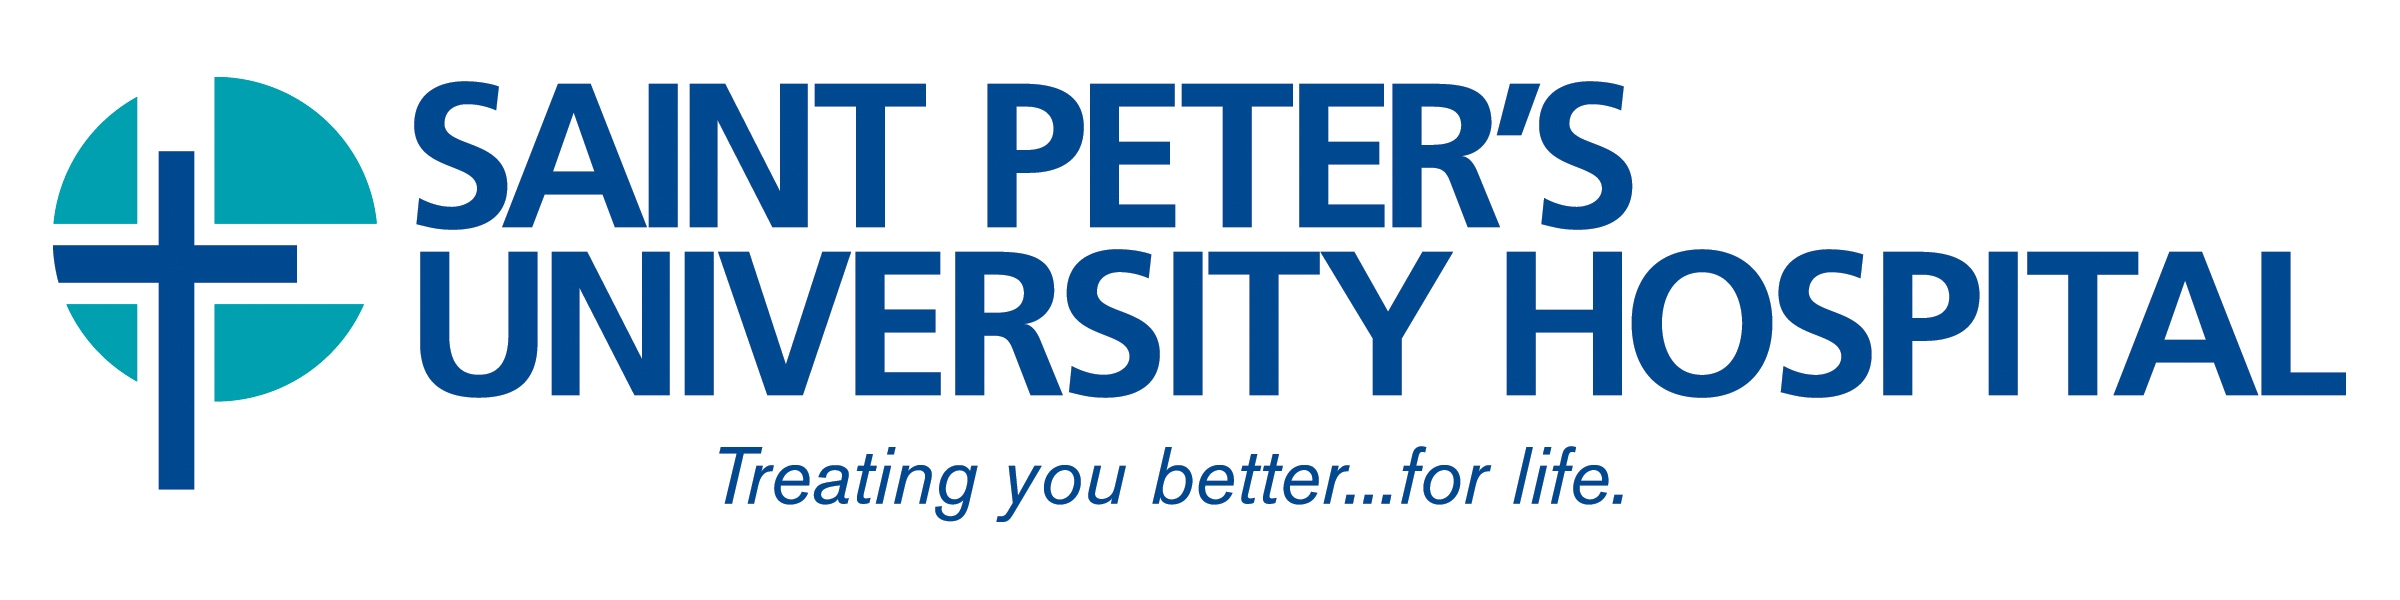 saint-peters-hospital-logo